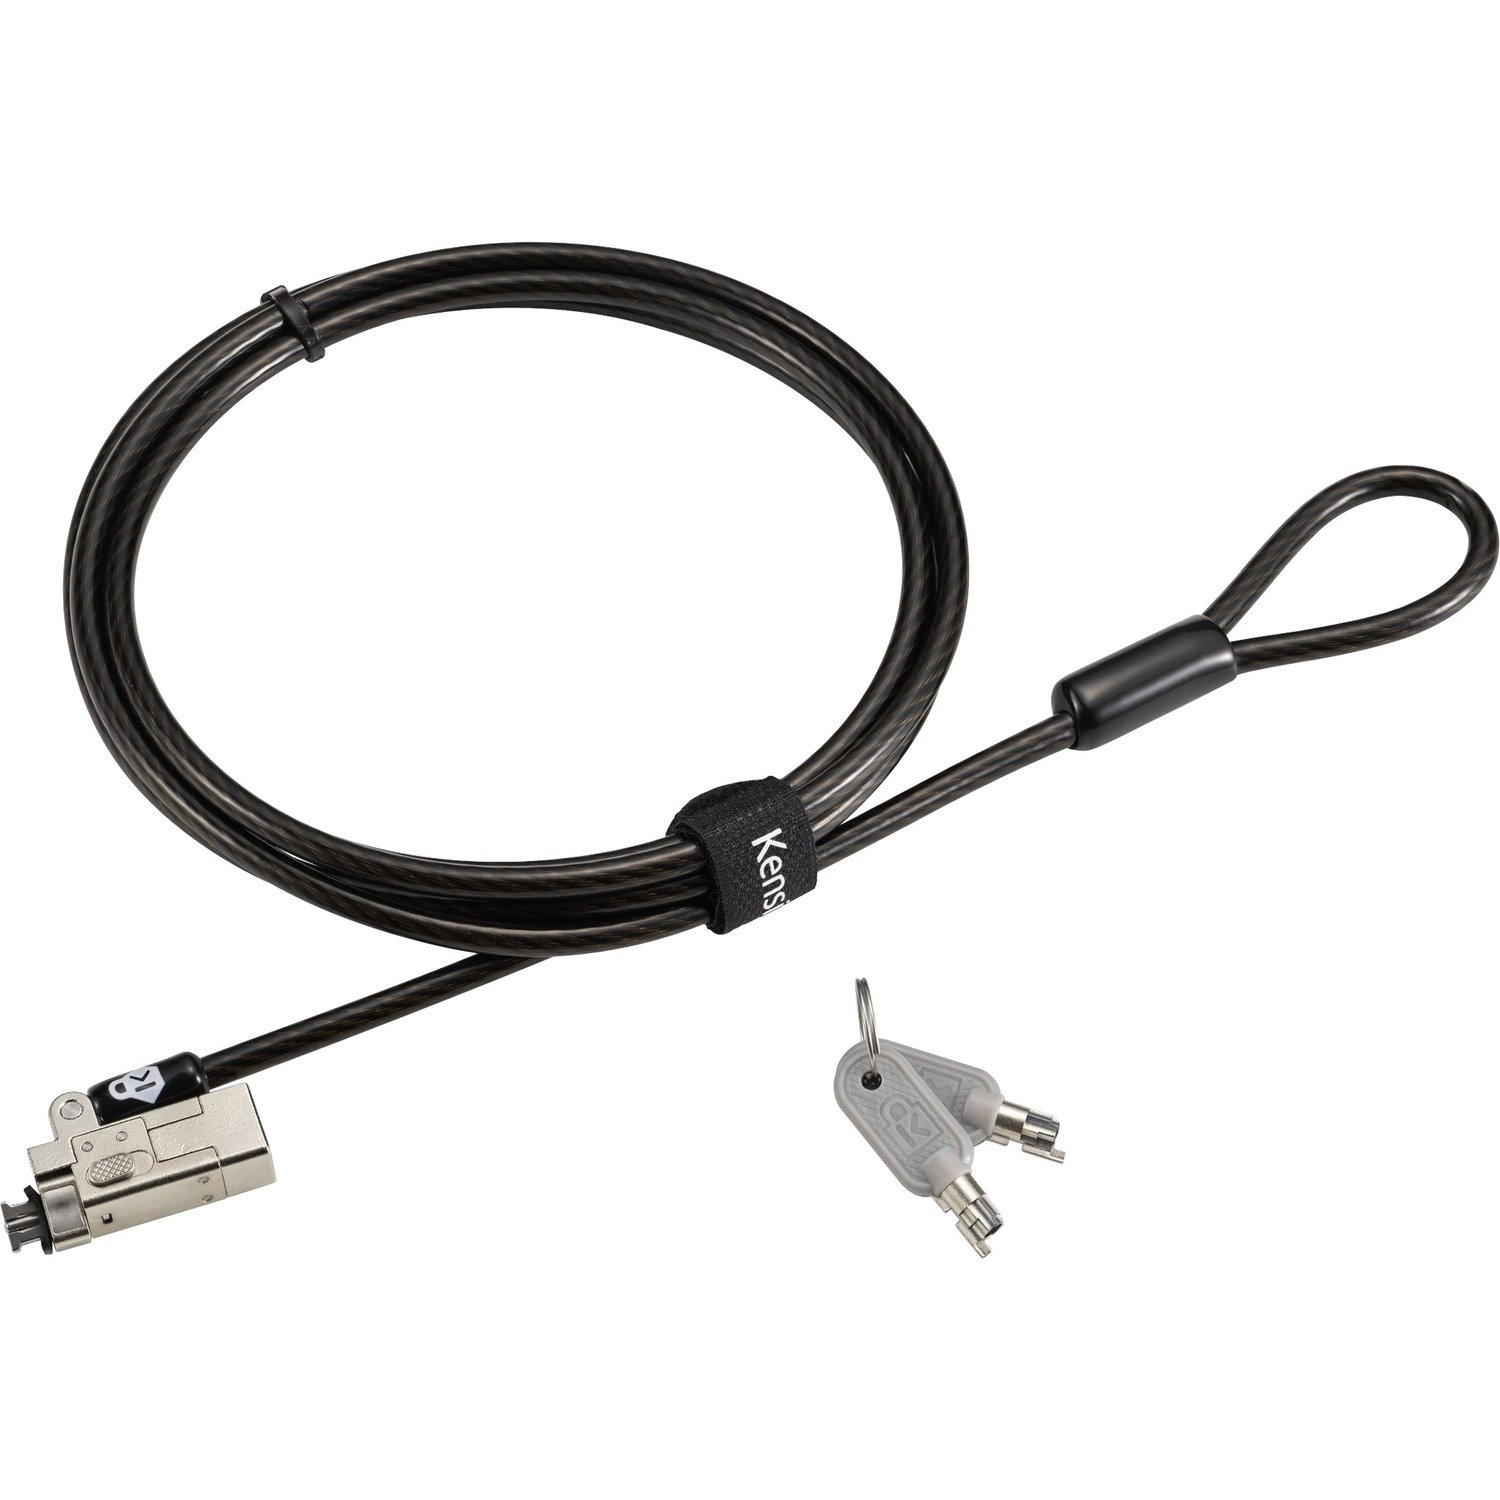 Kensington Slim NanoSaver Cable Lock For Notebook